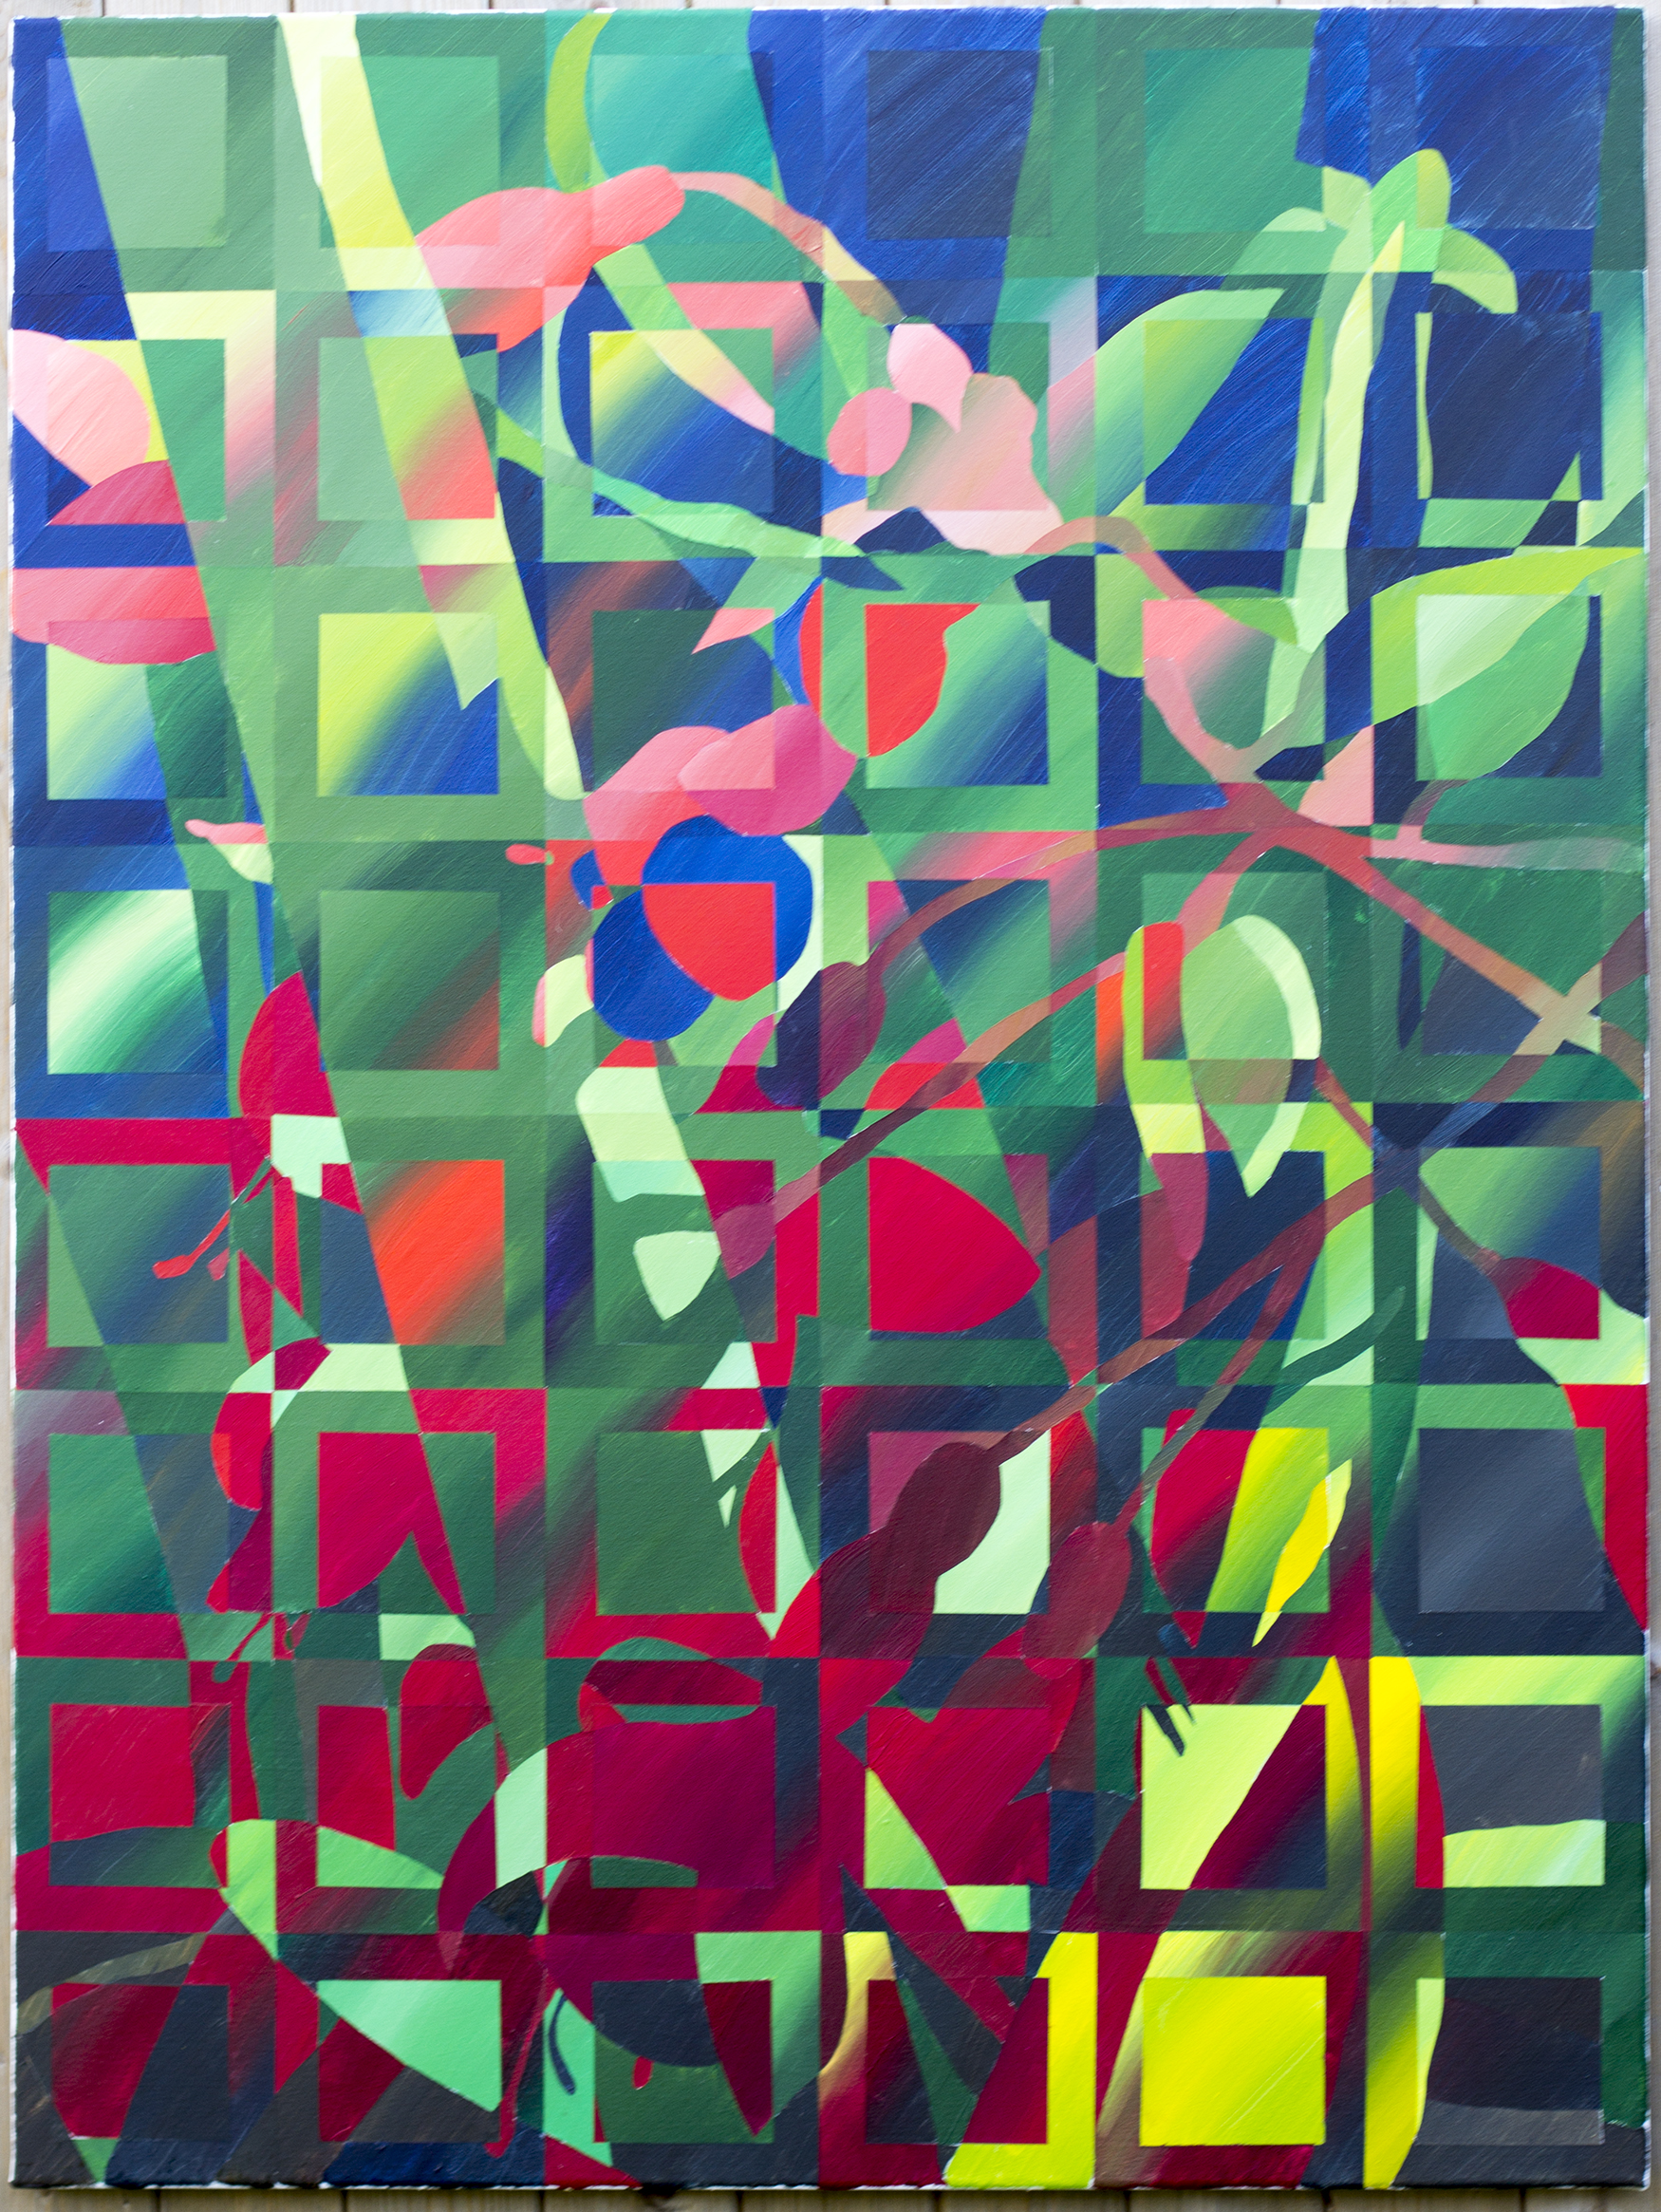 Seaford Fuchsia. Acrylic on canvas, 3'x4' framed - available from my gallery